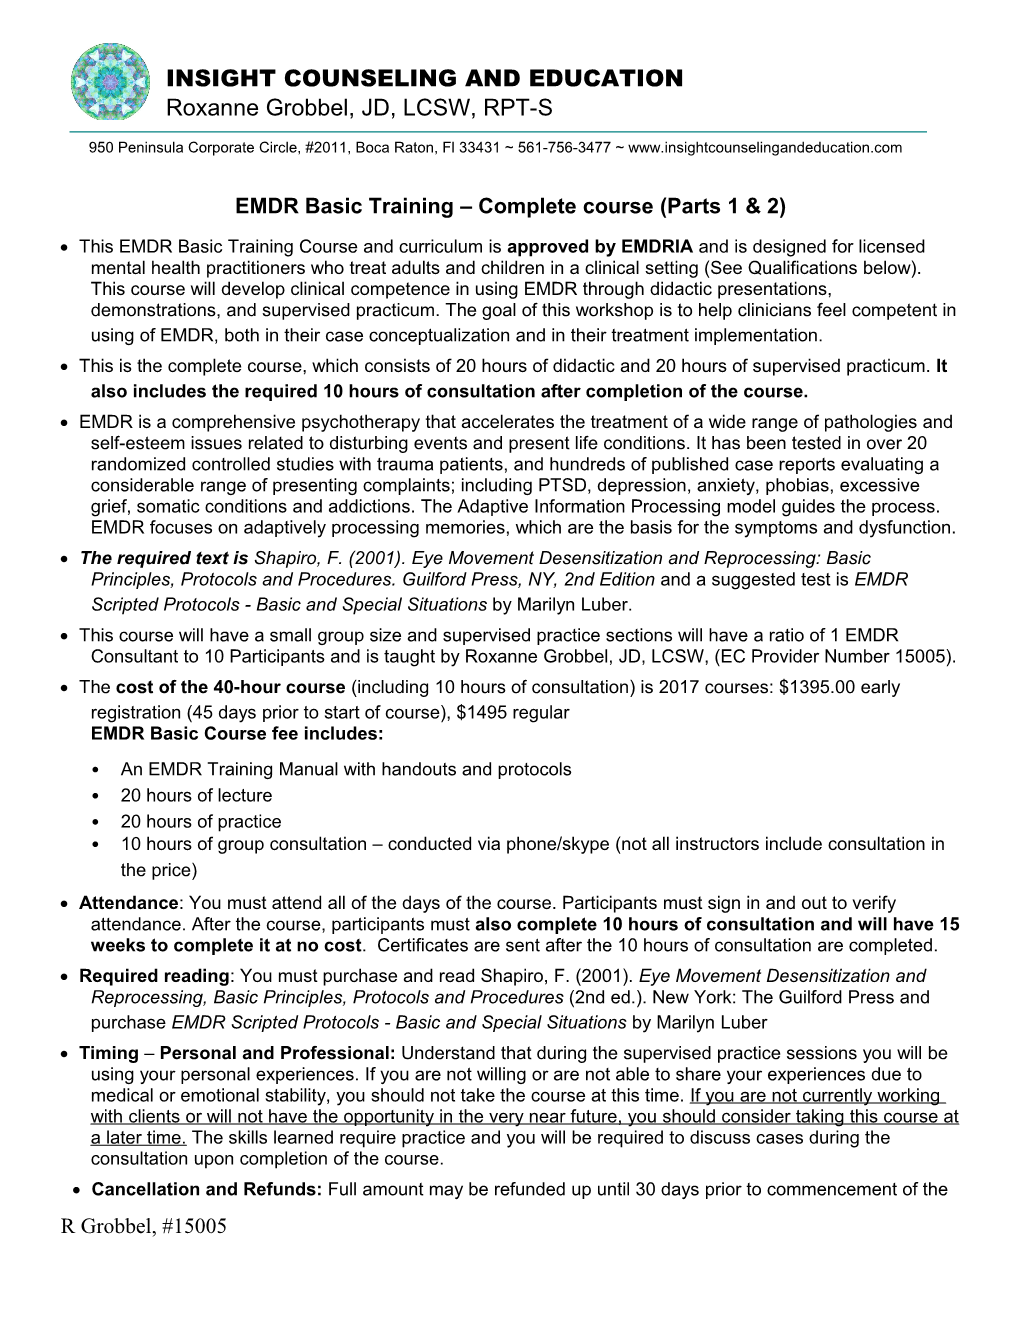 EMDR Basic Training Complete Course (Parts 1 & 2)